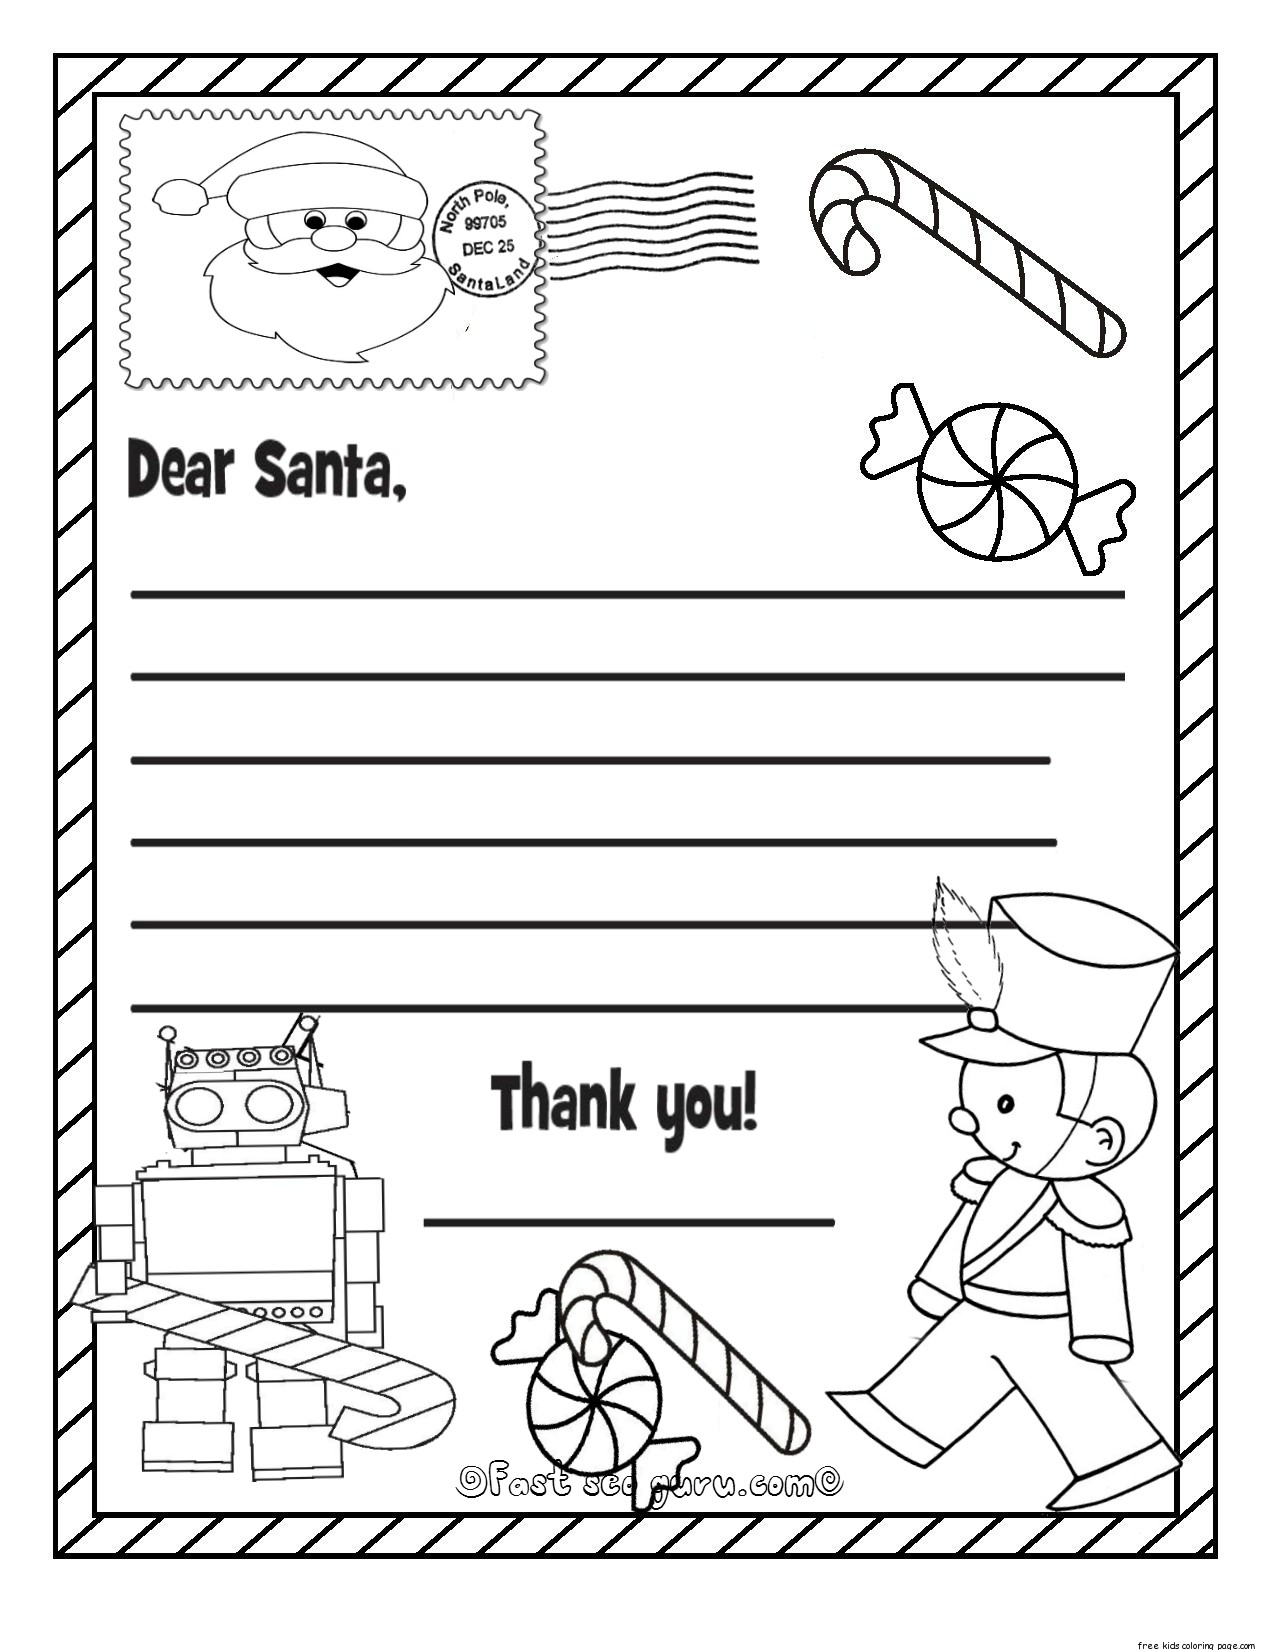 printable-christmas-wish-list-to-santa-claus-for-kids-for-kidsfree